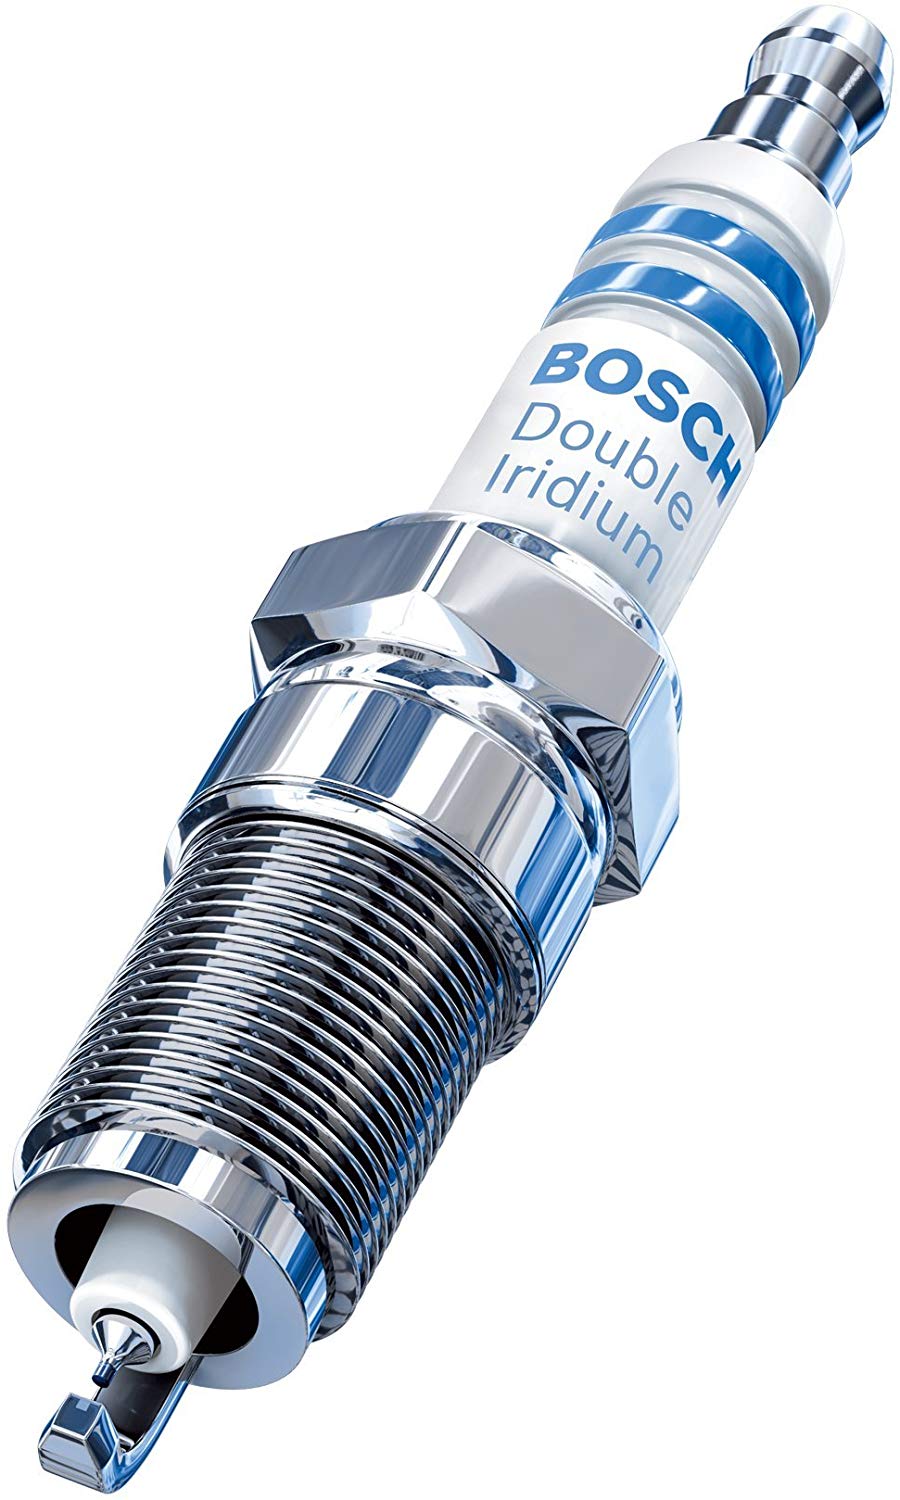 Bosch 9624 Double Iridium OE Replacement Spark Plug Up to 4X Longer Life (4 Pk) Accent, 09-11 Genesis, Hyundai Veloster, 12-17 Rio, 12-18 Kia Soul, 4 Pack